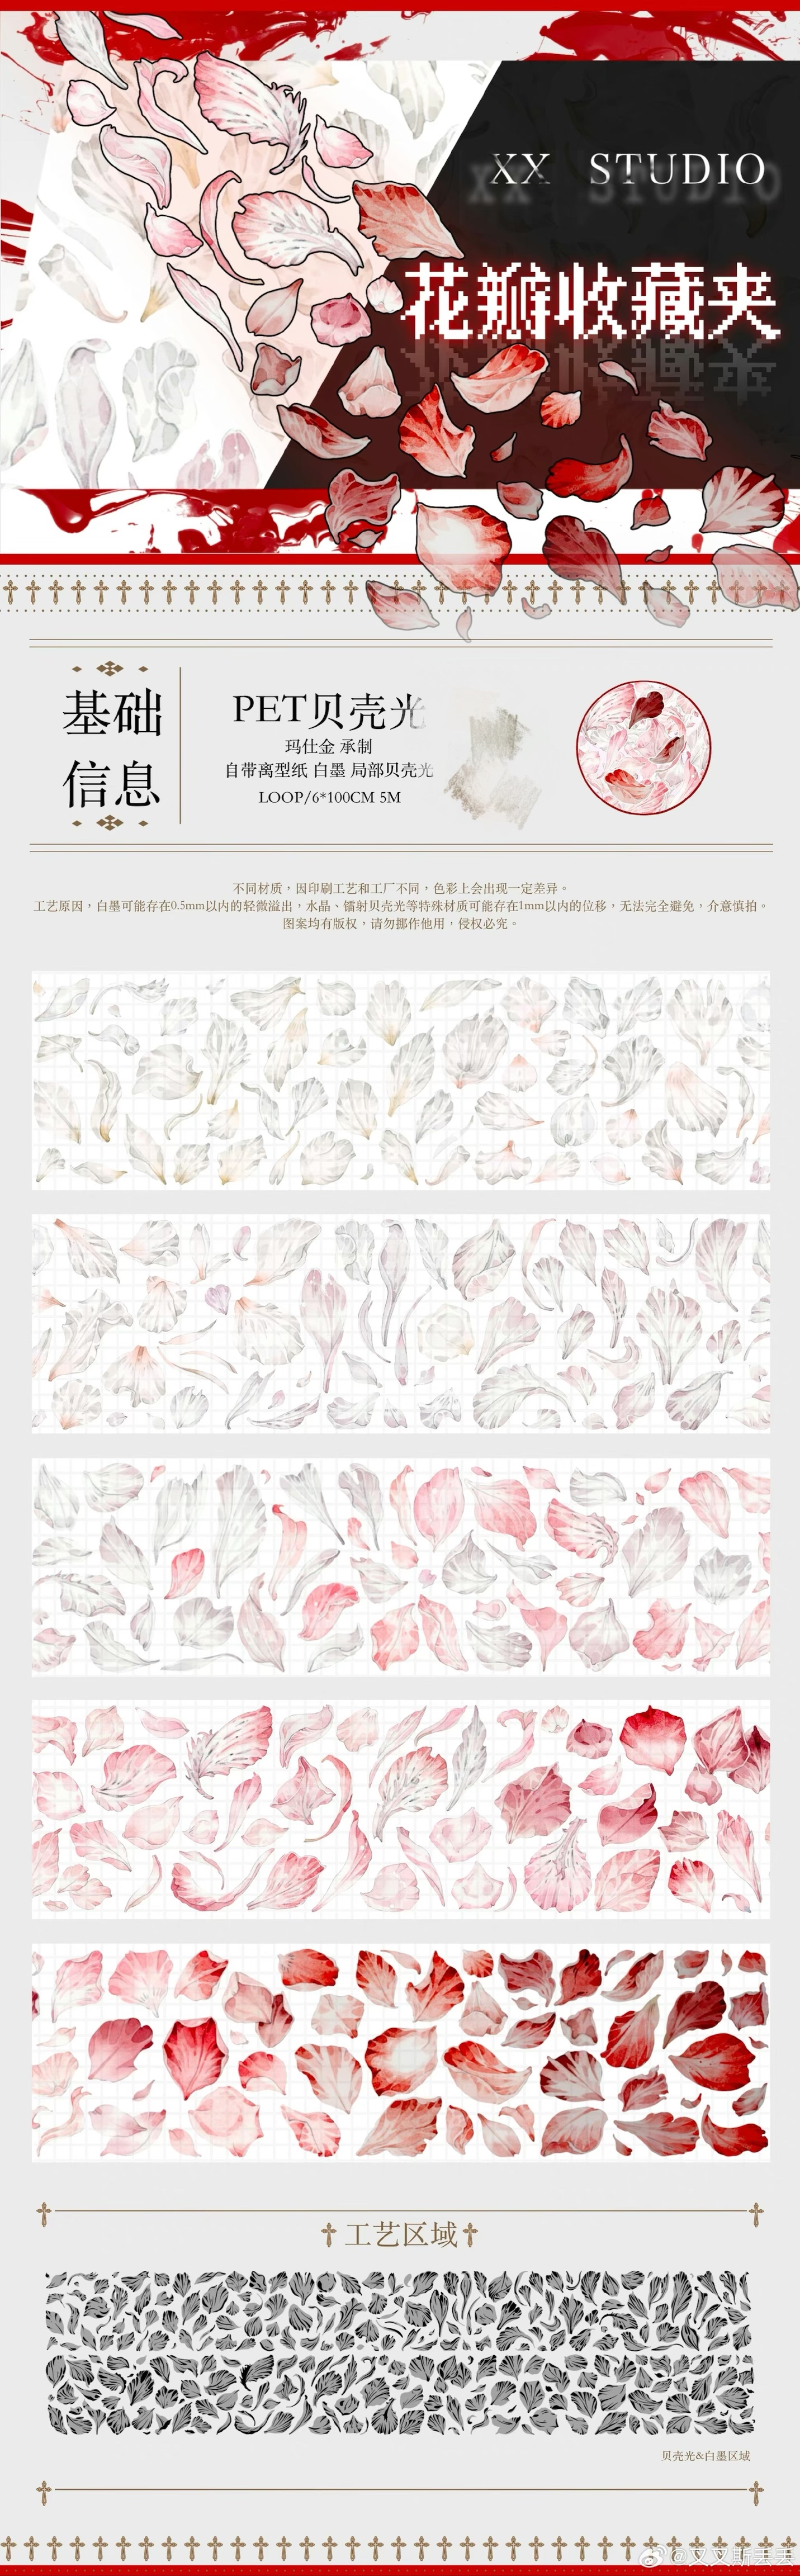 XX Studio Flower Rose Petals PET Baker Light Tape